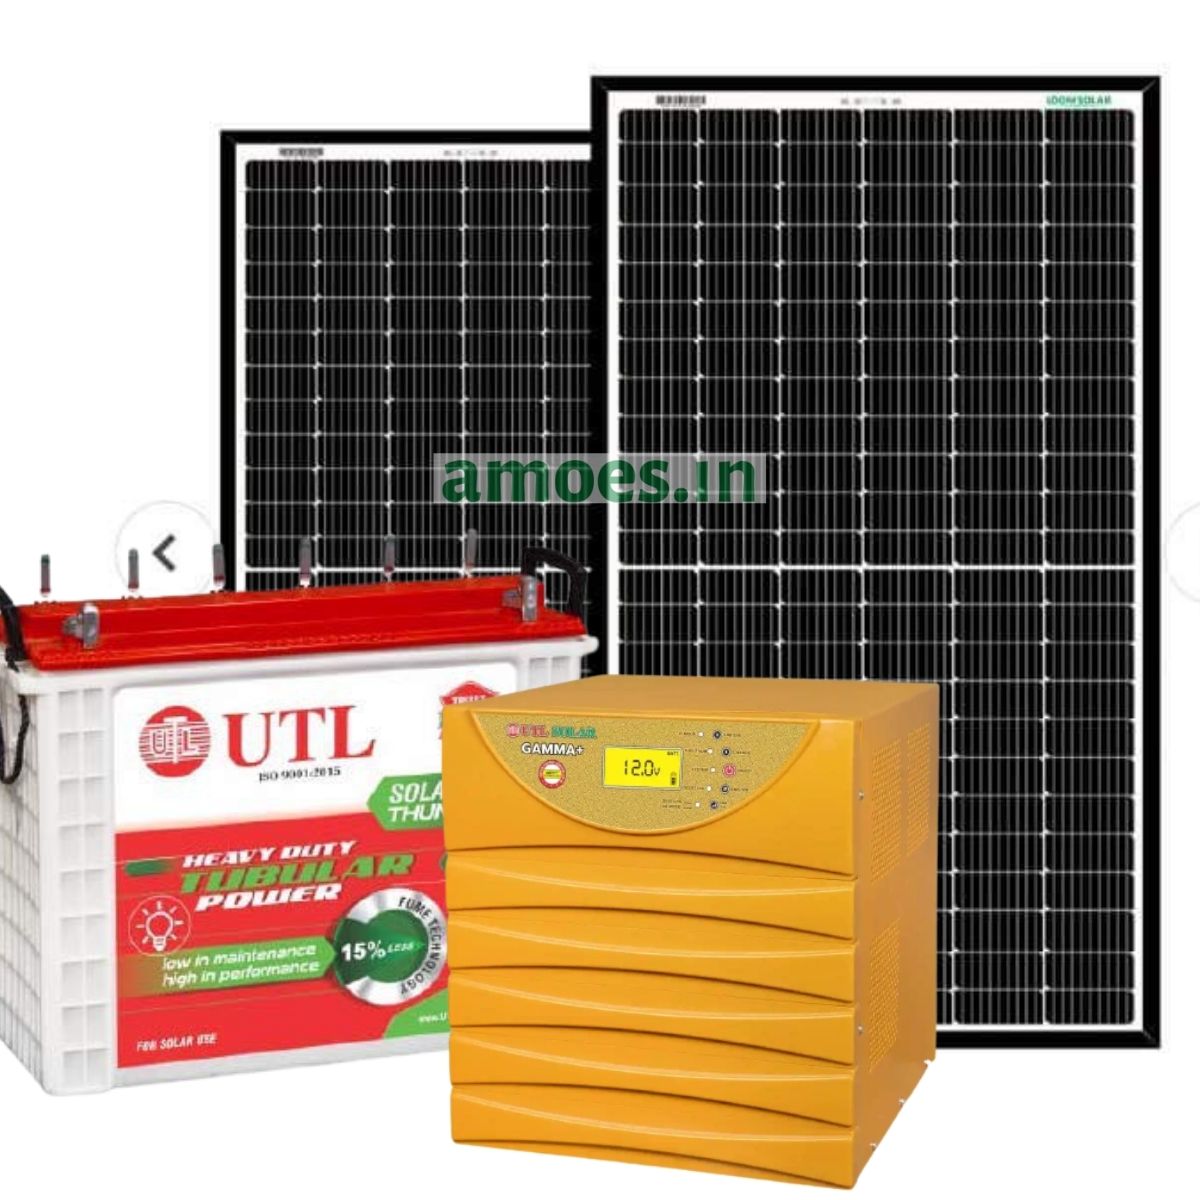 Utl Gamma plus 3KVA off grid solar system – 1.65kWp Loom Solar panel